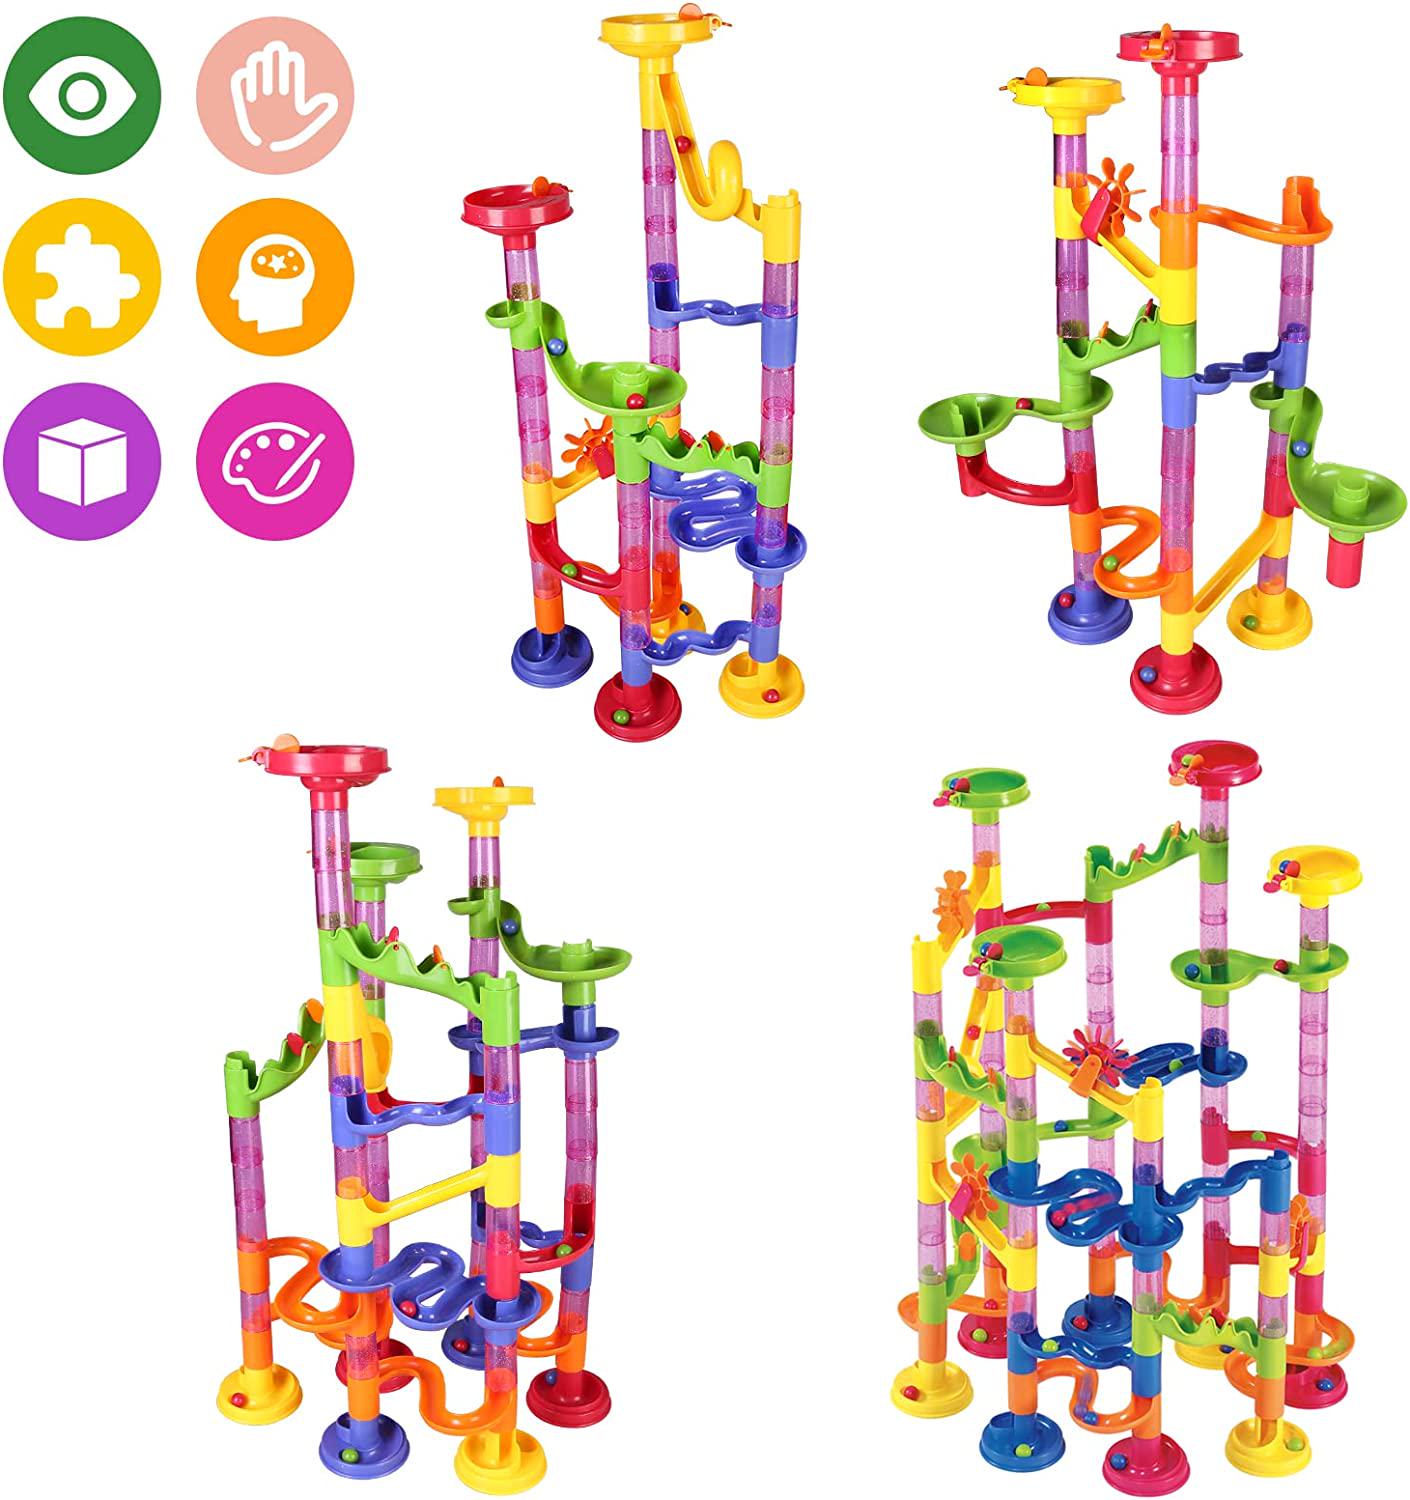 kramow, Marble Run Set 105 PCS Construction Building Blocks Toys Game for 4 5 6 7 Year Old Boys Girls Kids